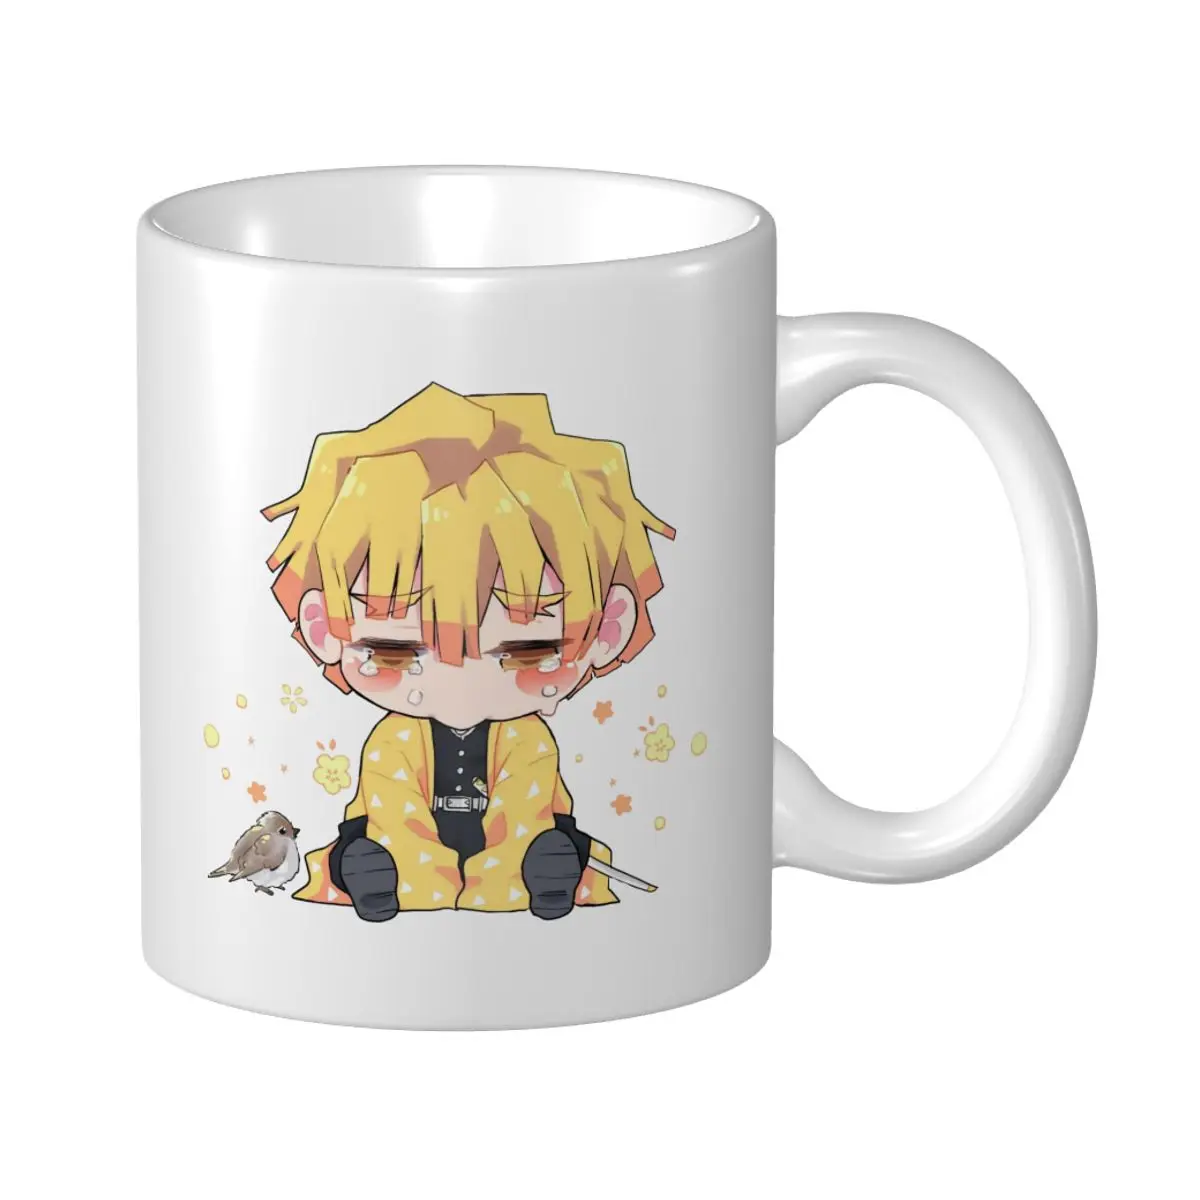 

Demon Slayer Coffe Mug Solid color Mugs Personality Ceramic Mugs Eco Friendly Tea Cup 330ml (11oz)